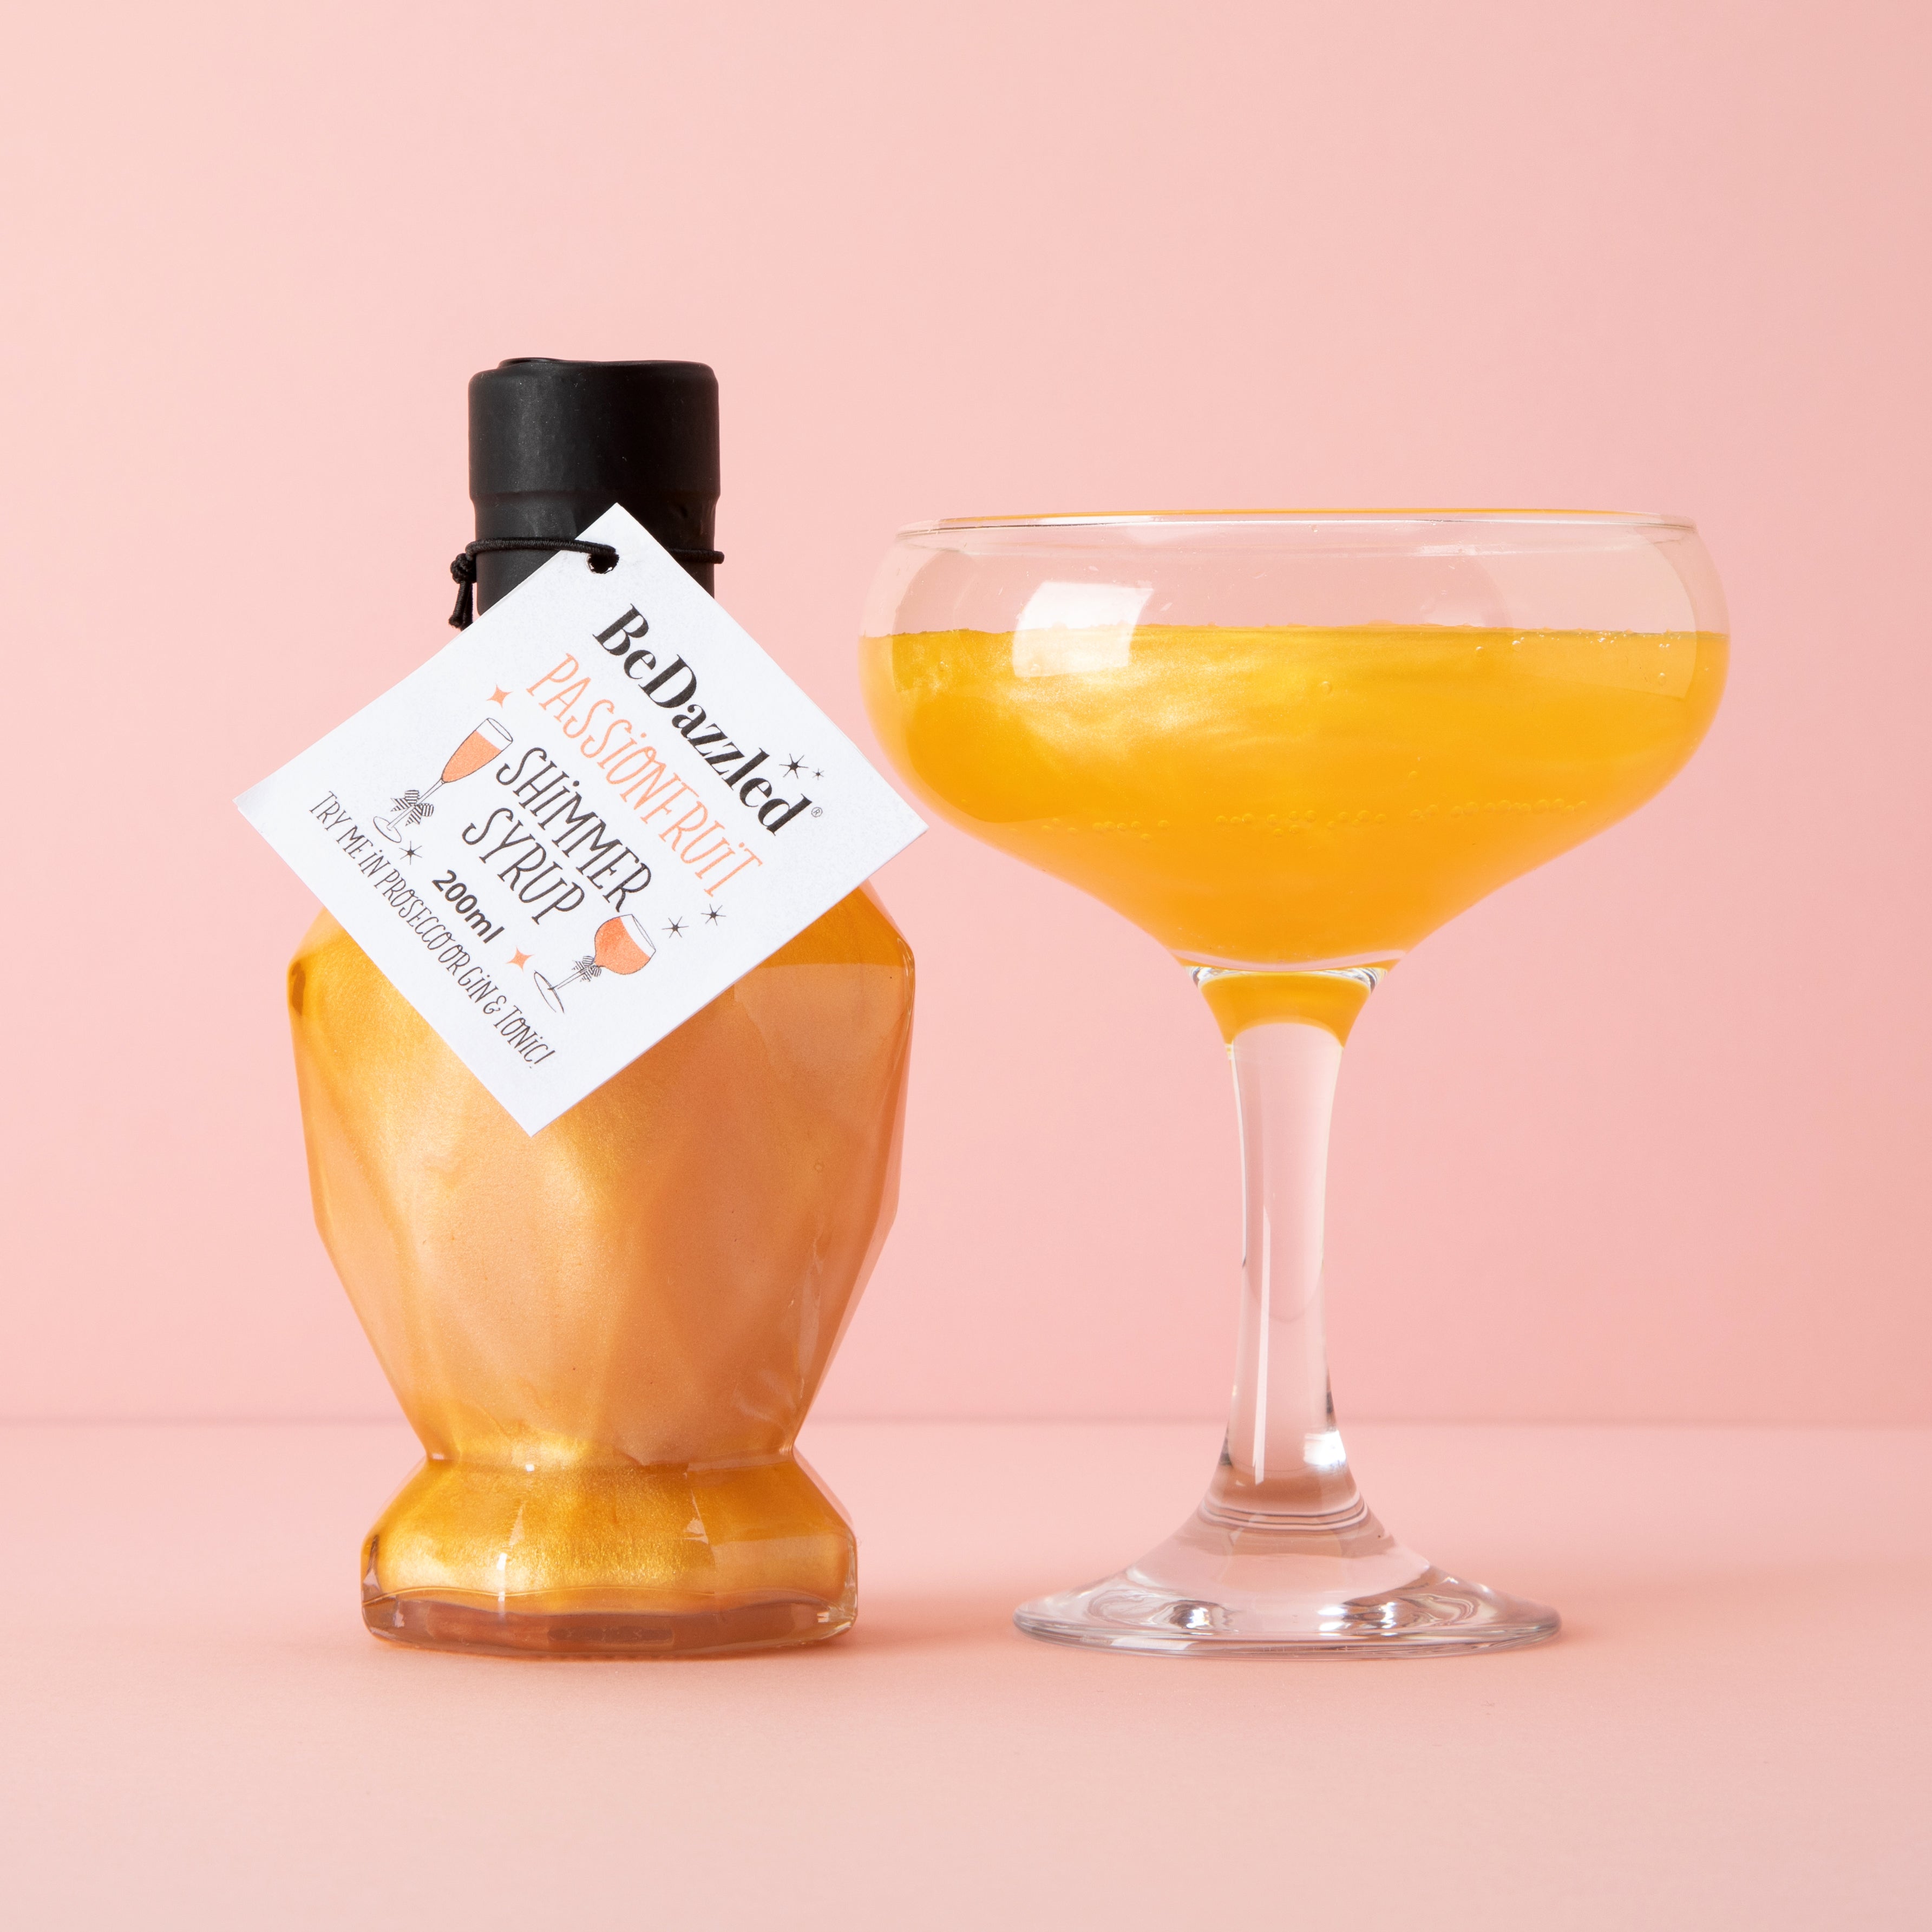 Passionfruit Shimmer Syrup 200ml Diamond Bottle